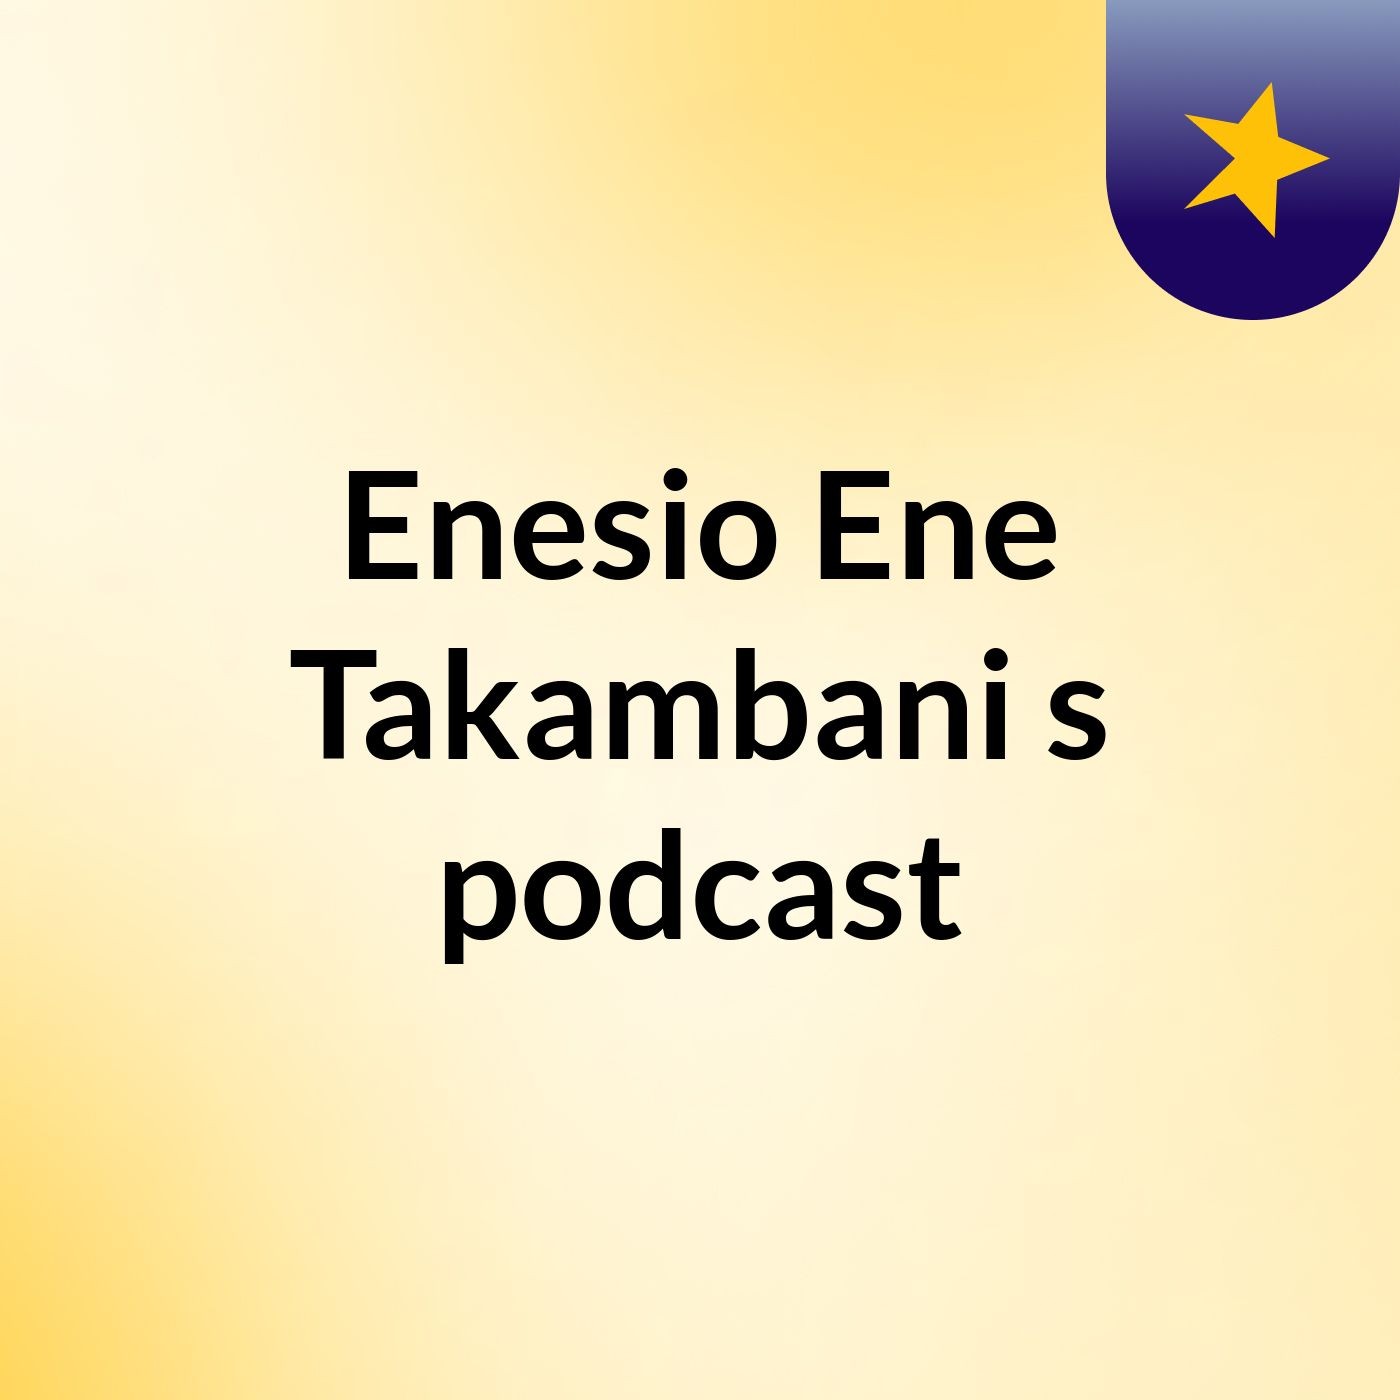 Enesio Ene Takambani's podcast